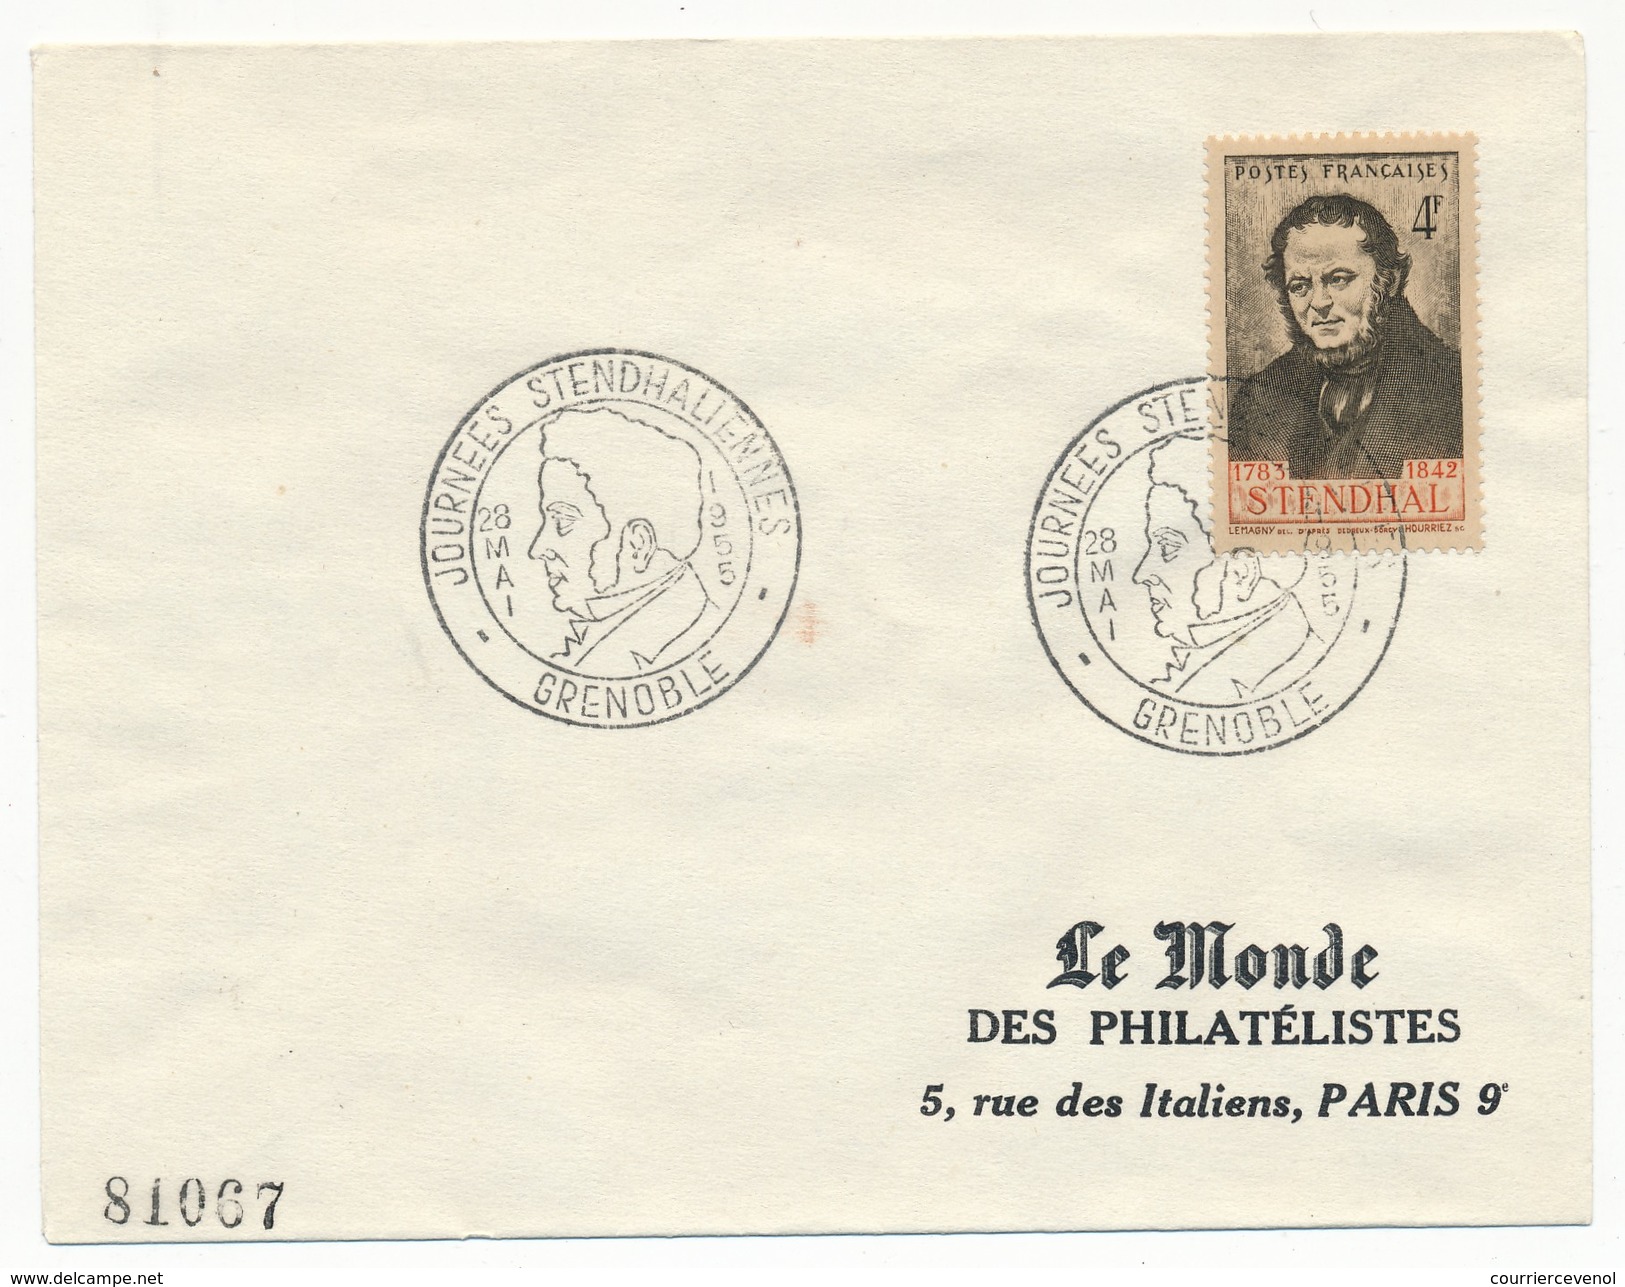 FRANCE - Enveloppe - Cachet Temporaire "Journées Stendhaliennes" GRENOBLE 28 Mai 1955 - Schrijvers